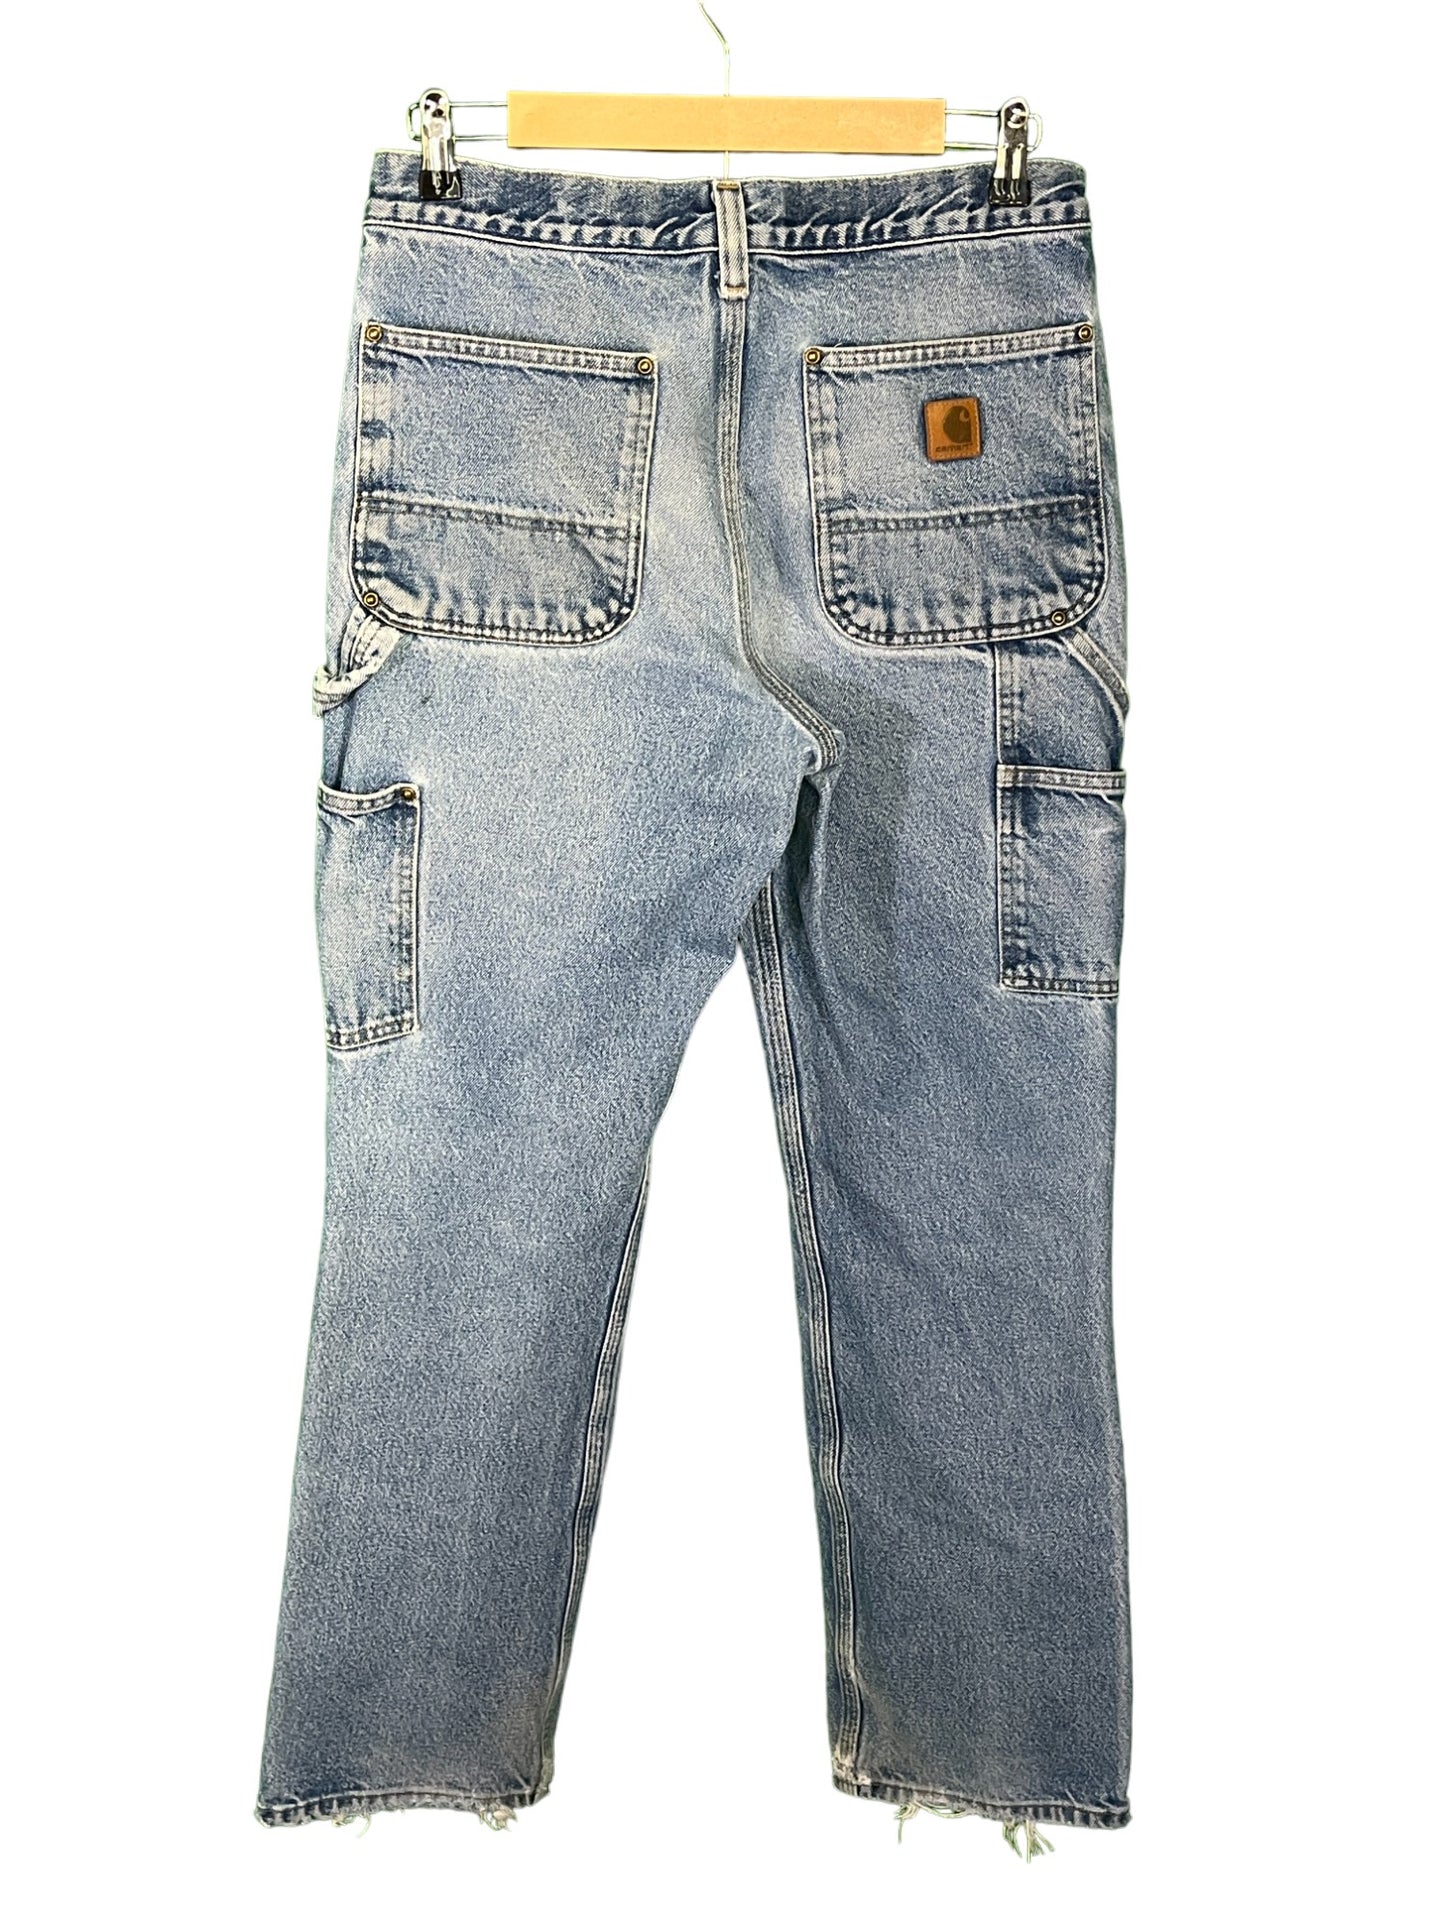 Vintage Carhartt Denim Double Knee Carpenter Jeans Size 31x32